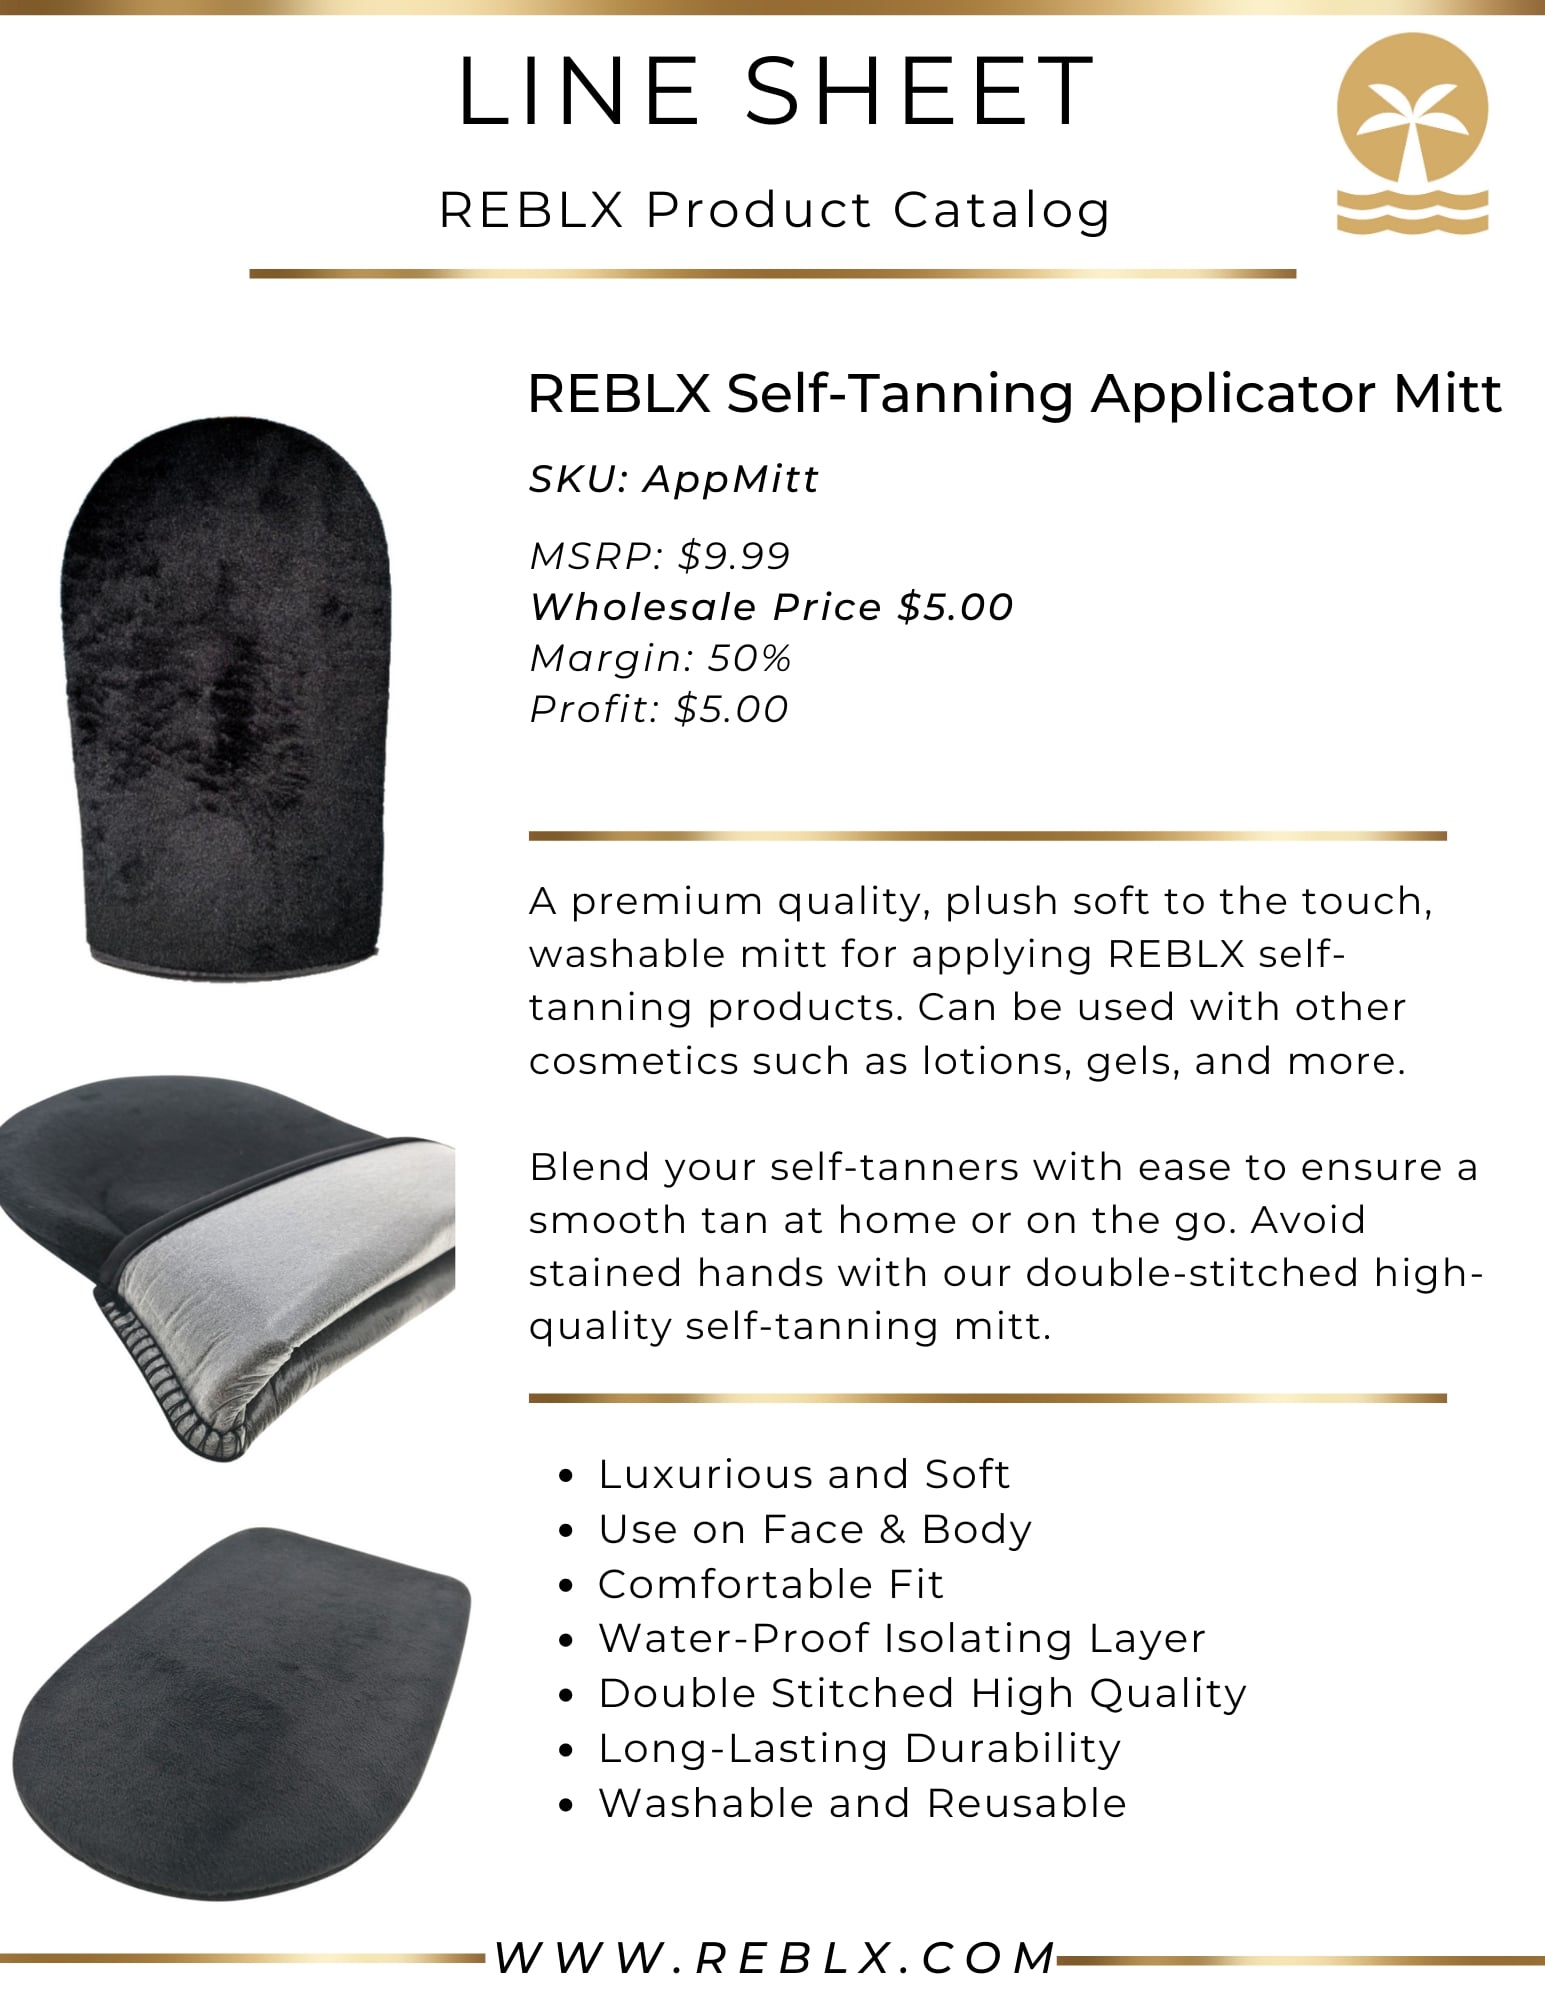 REBLX Product Catalog - REBLX Self-Tanning Applicator Mitt